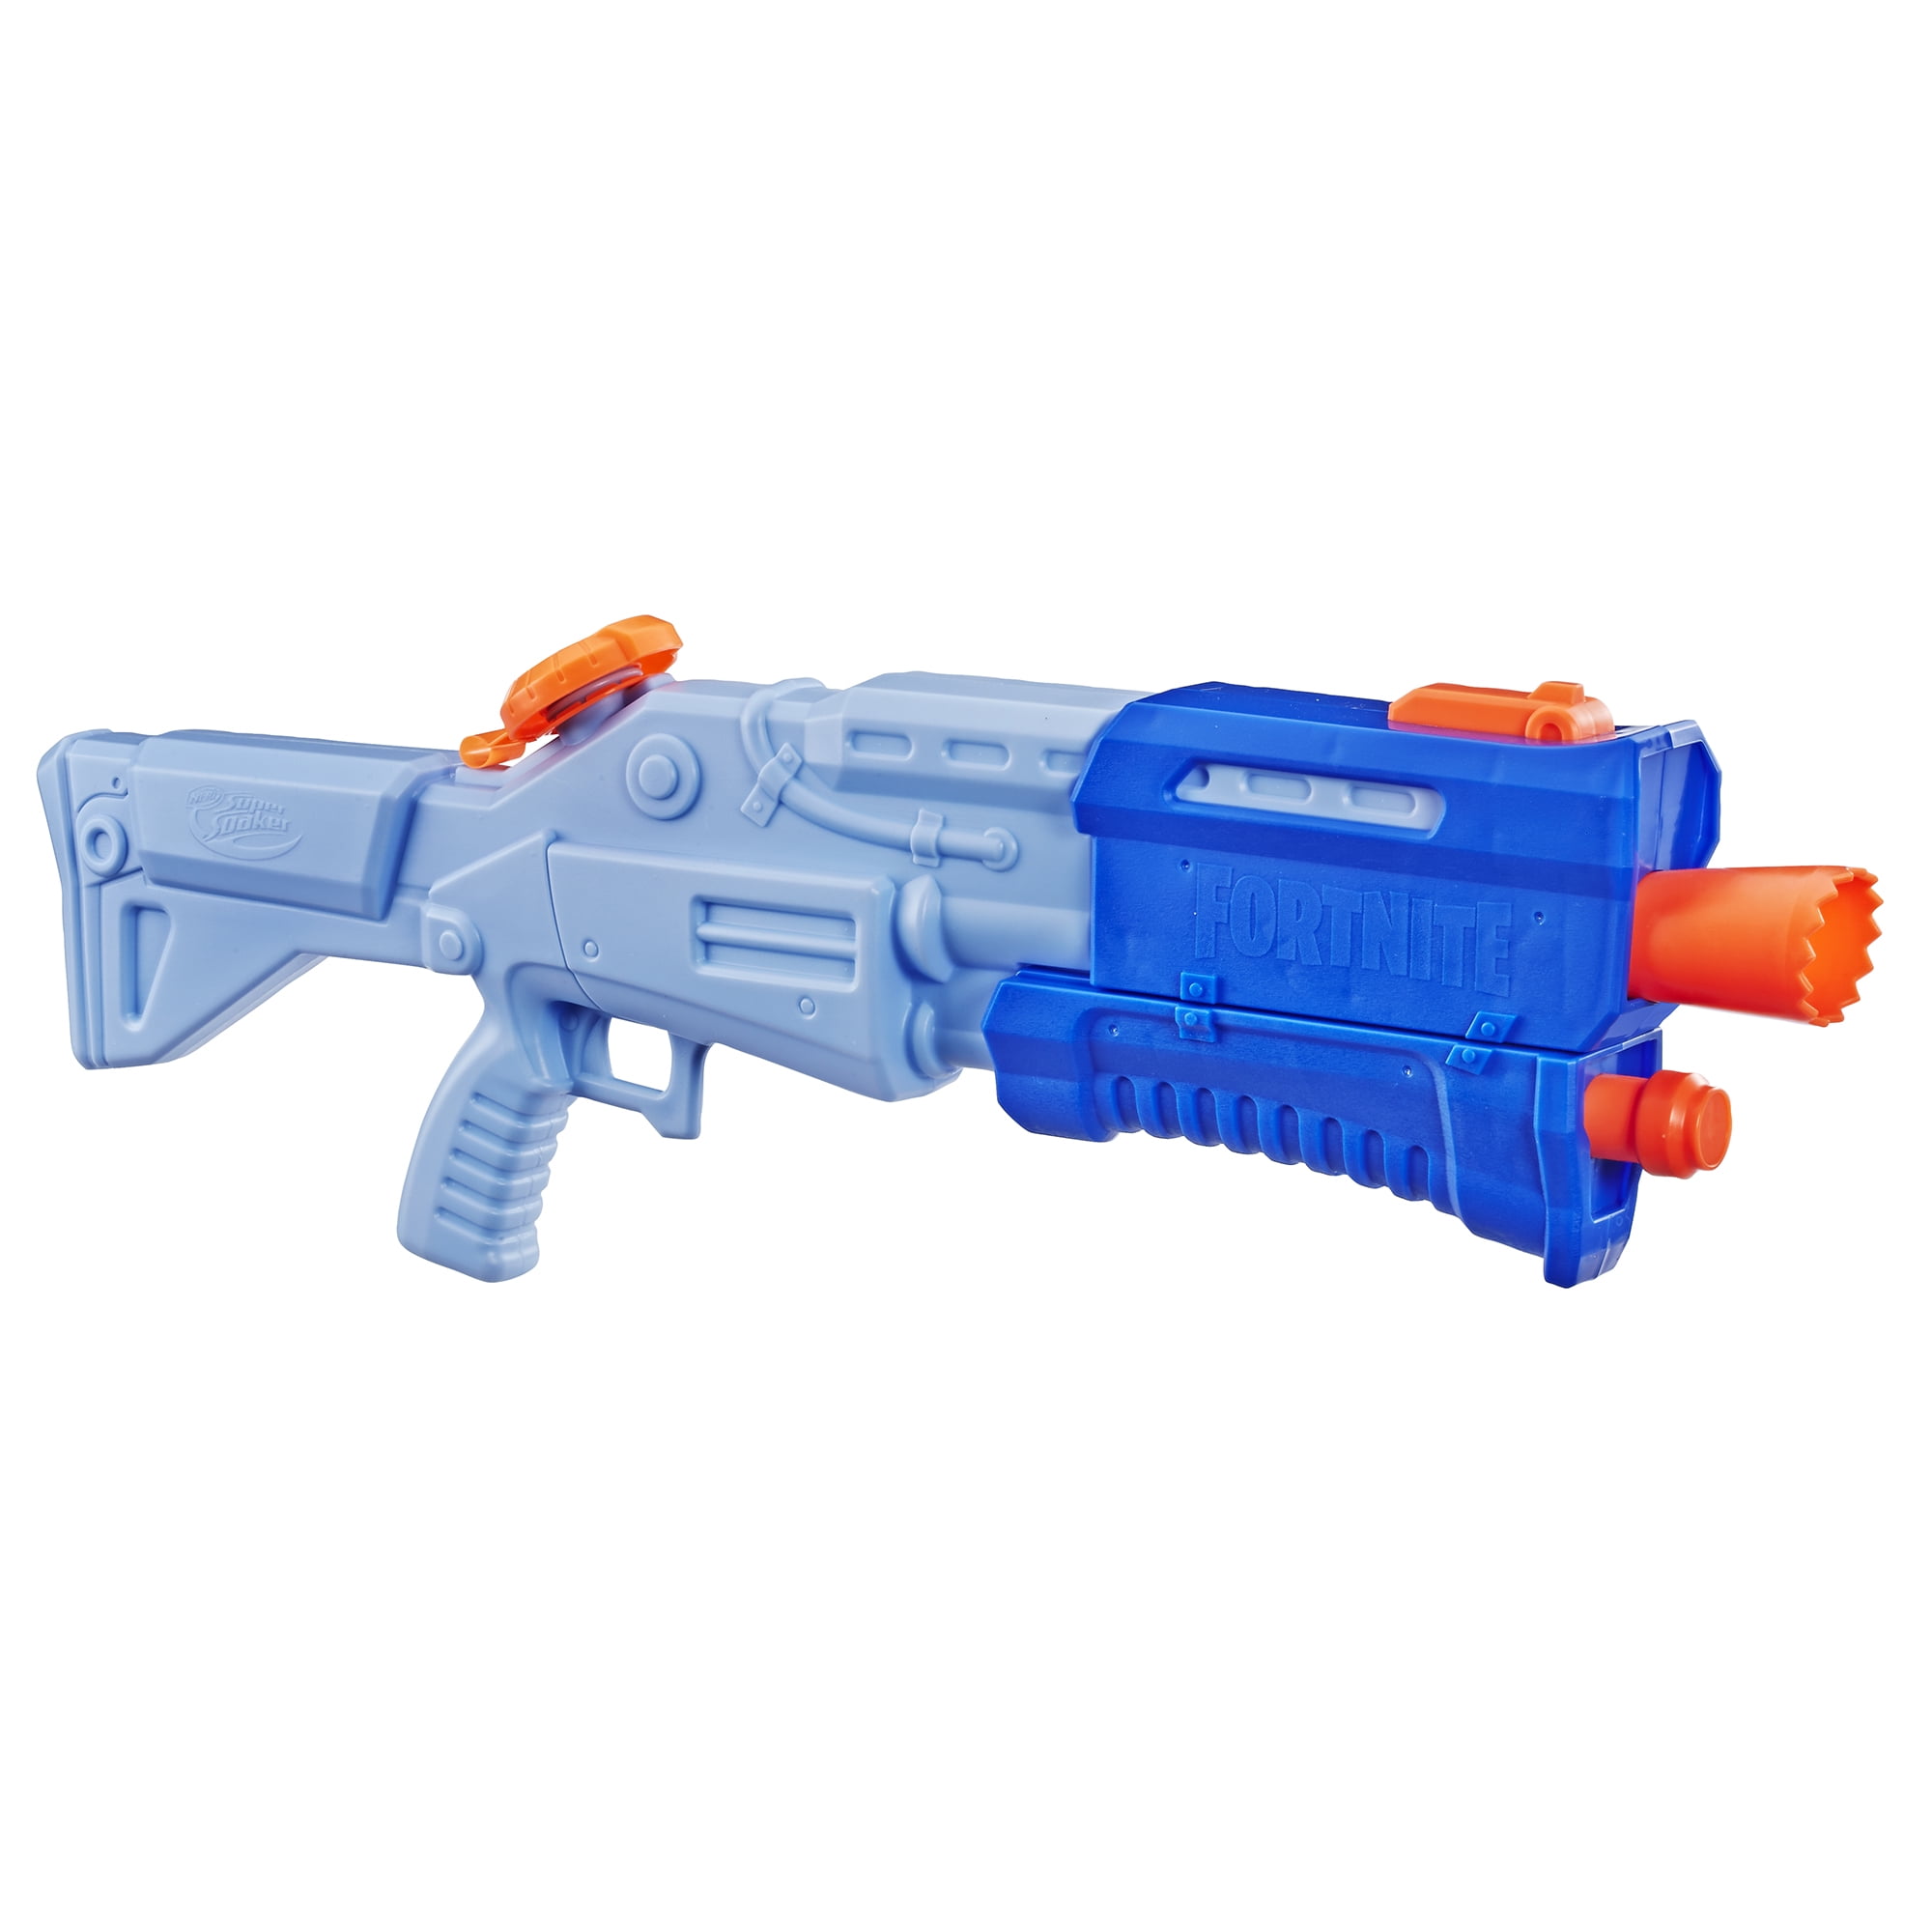 NERF Fortnite Hc-e Super Soaker Toy Water Blaster D14 for sale online 